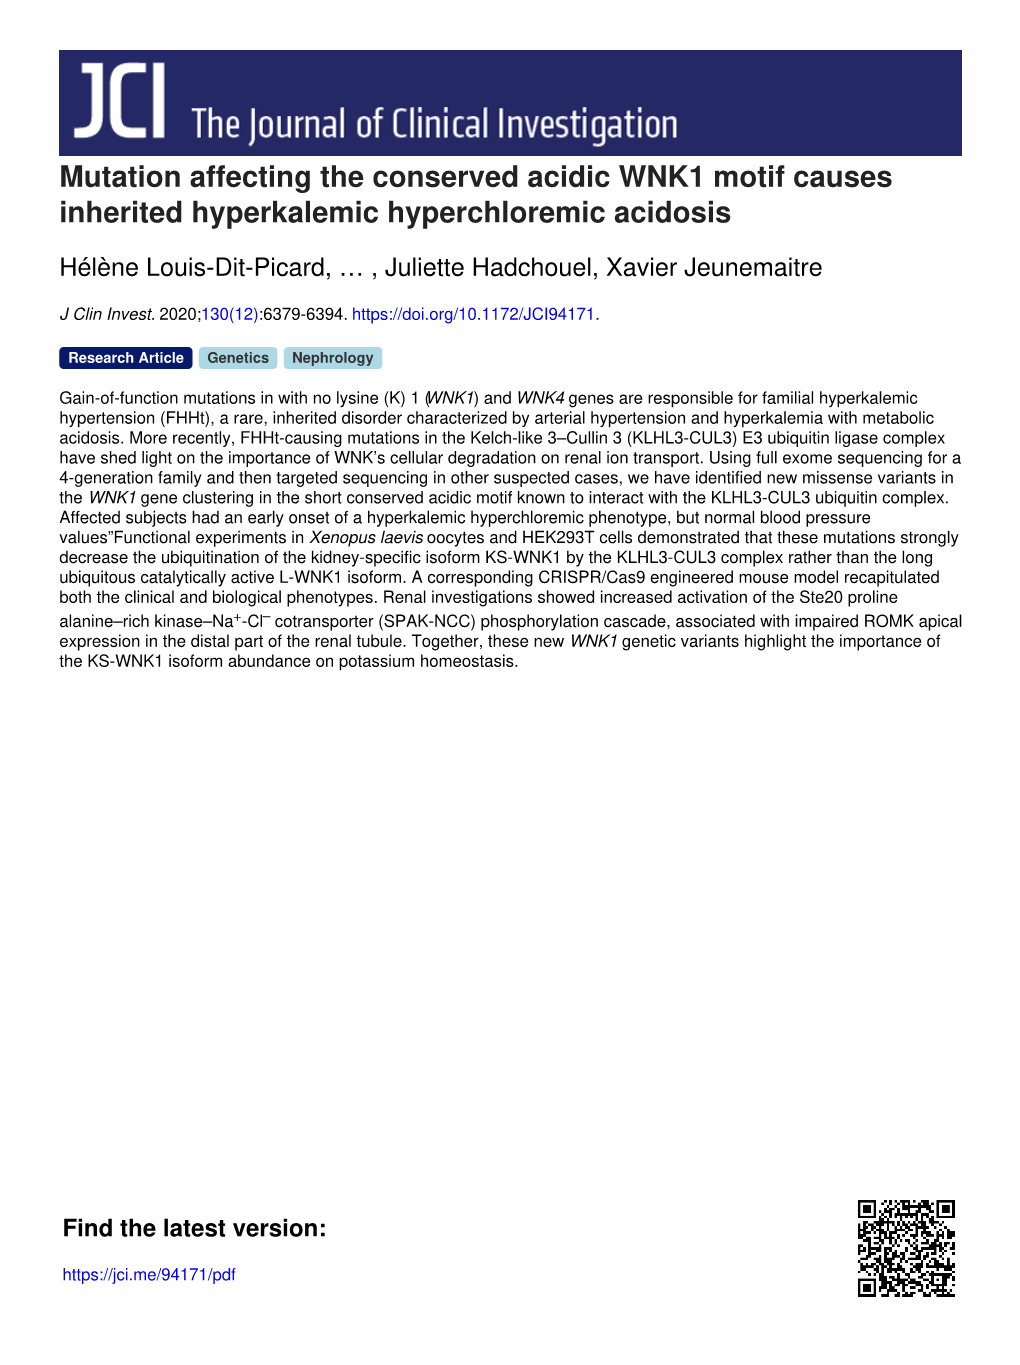 Mutation Affecting the Conserved Acidic WNK1 Motif Causes Inherited Hyperkalemic Hyperchloremic Acidosis